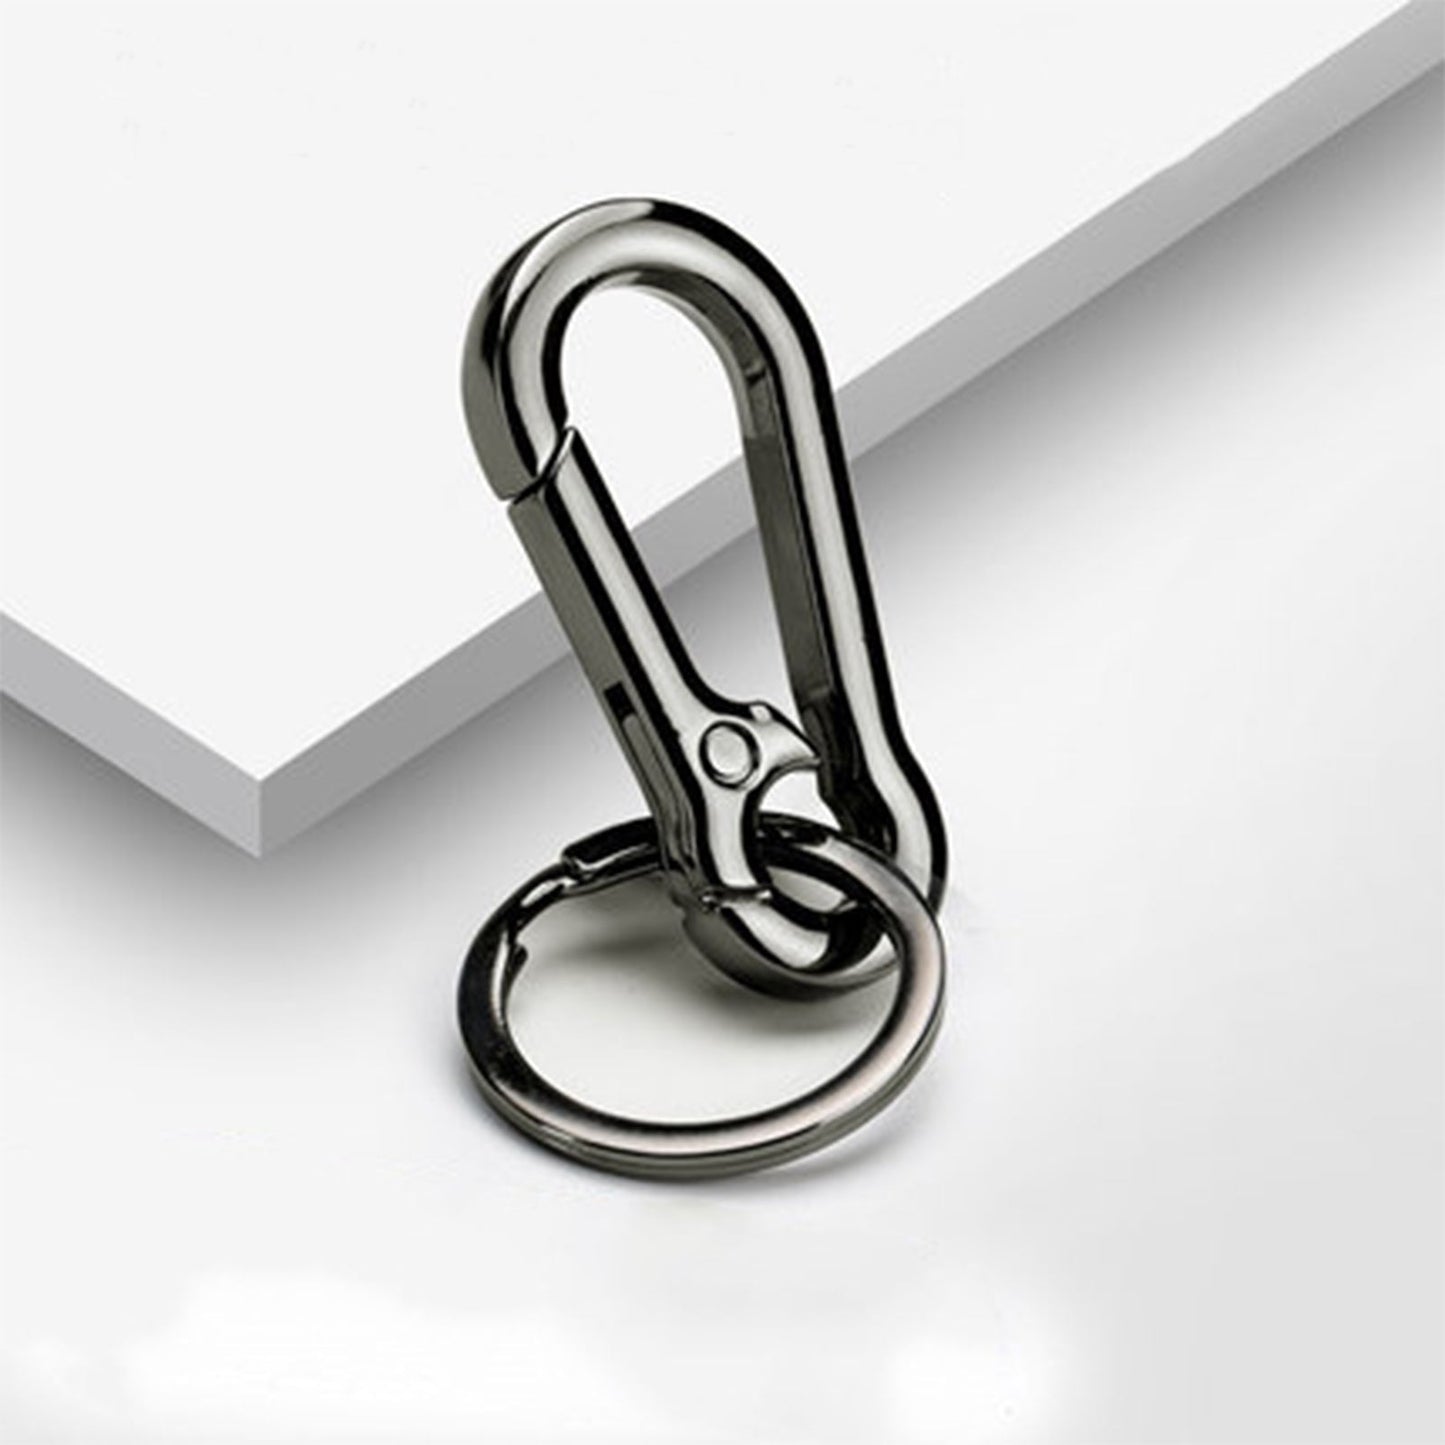 Chrome Metal Spring Steel Pull Chain keyring keychain key chain pendant Key